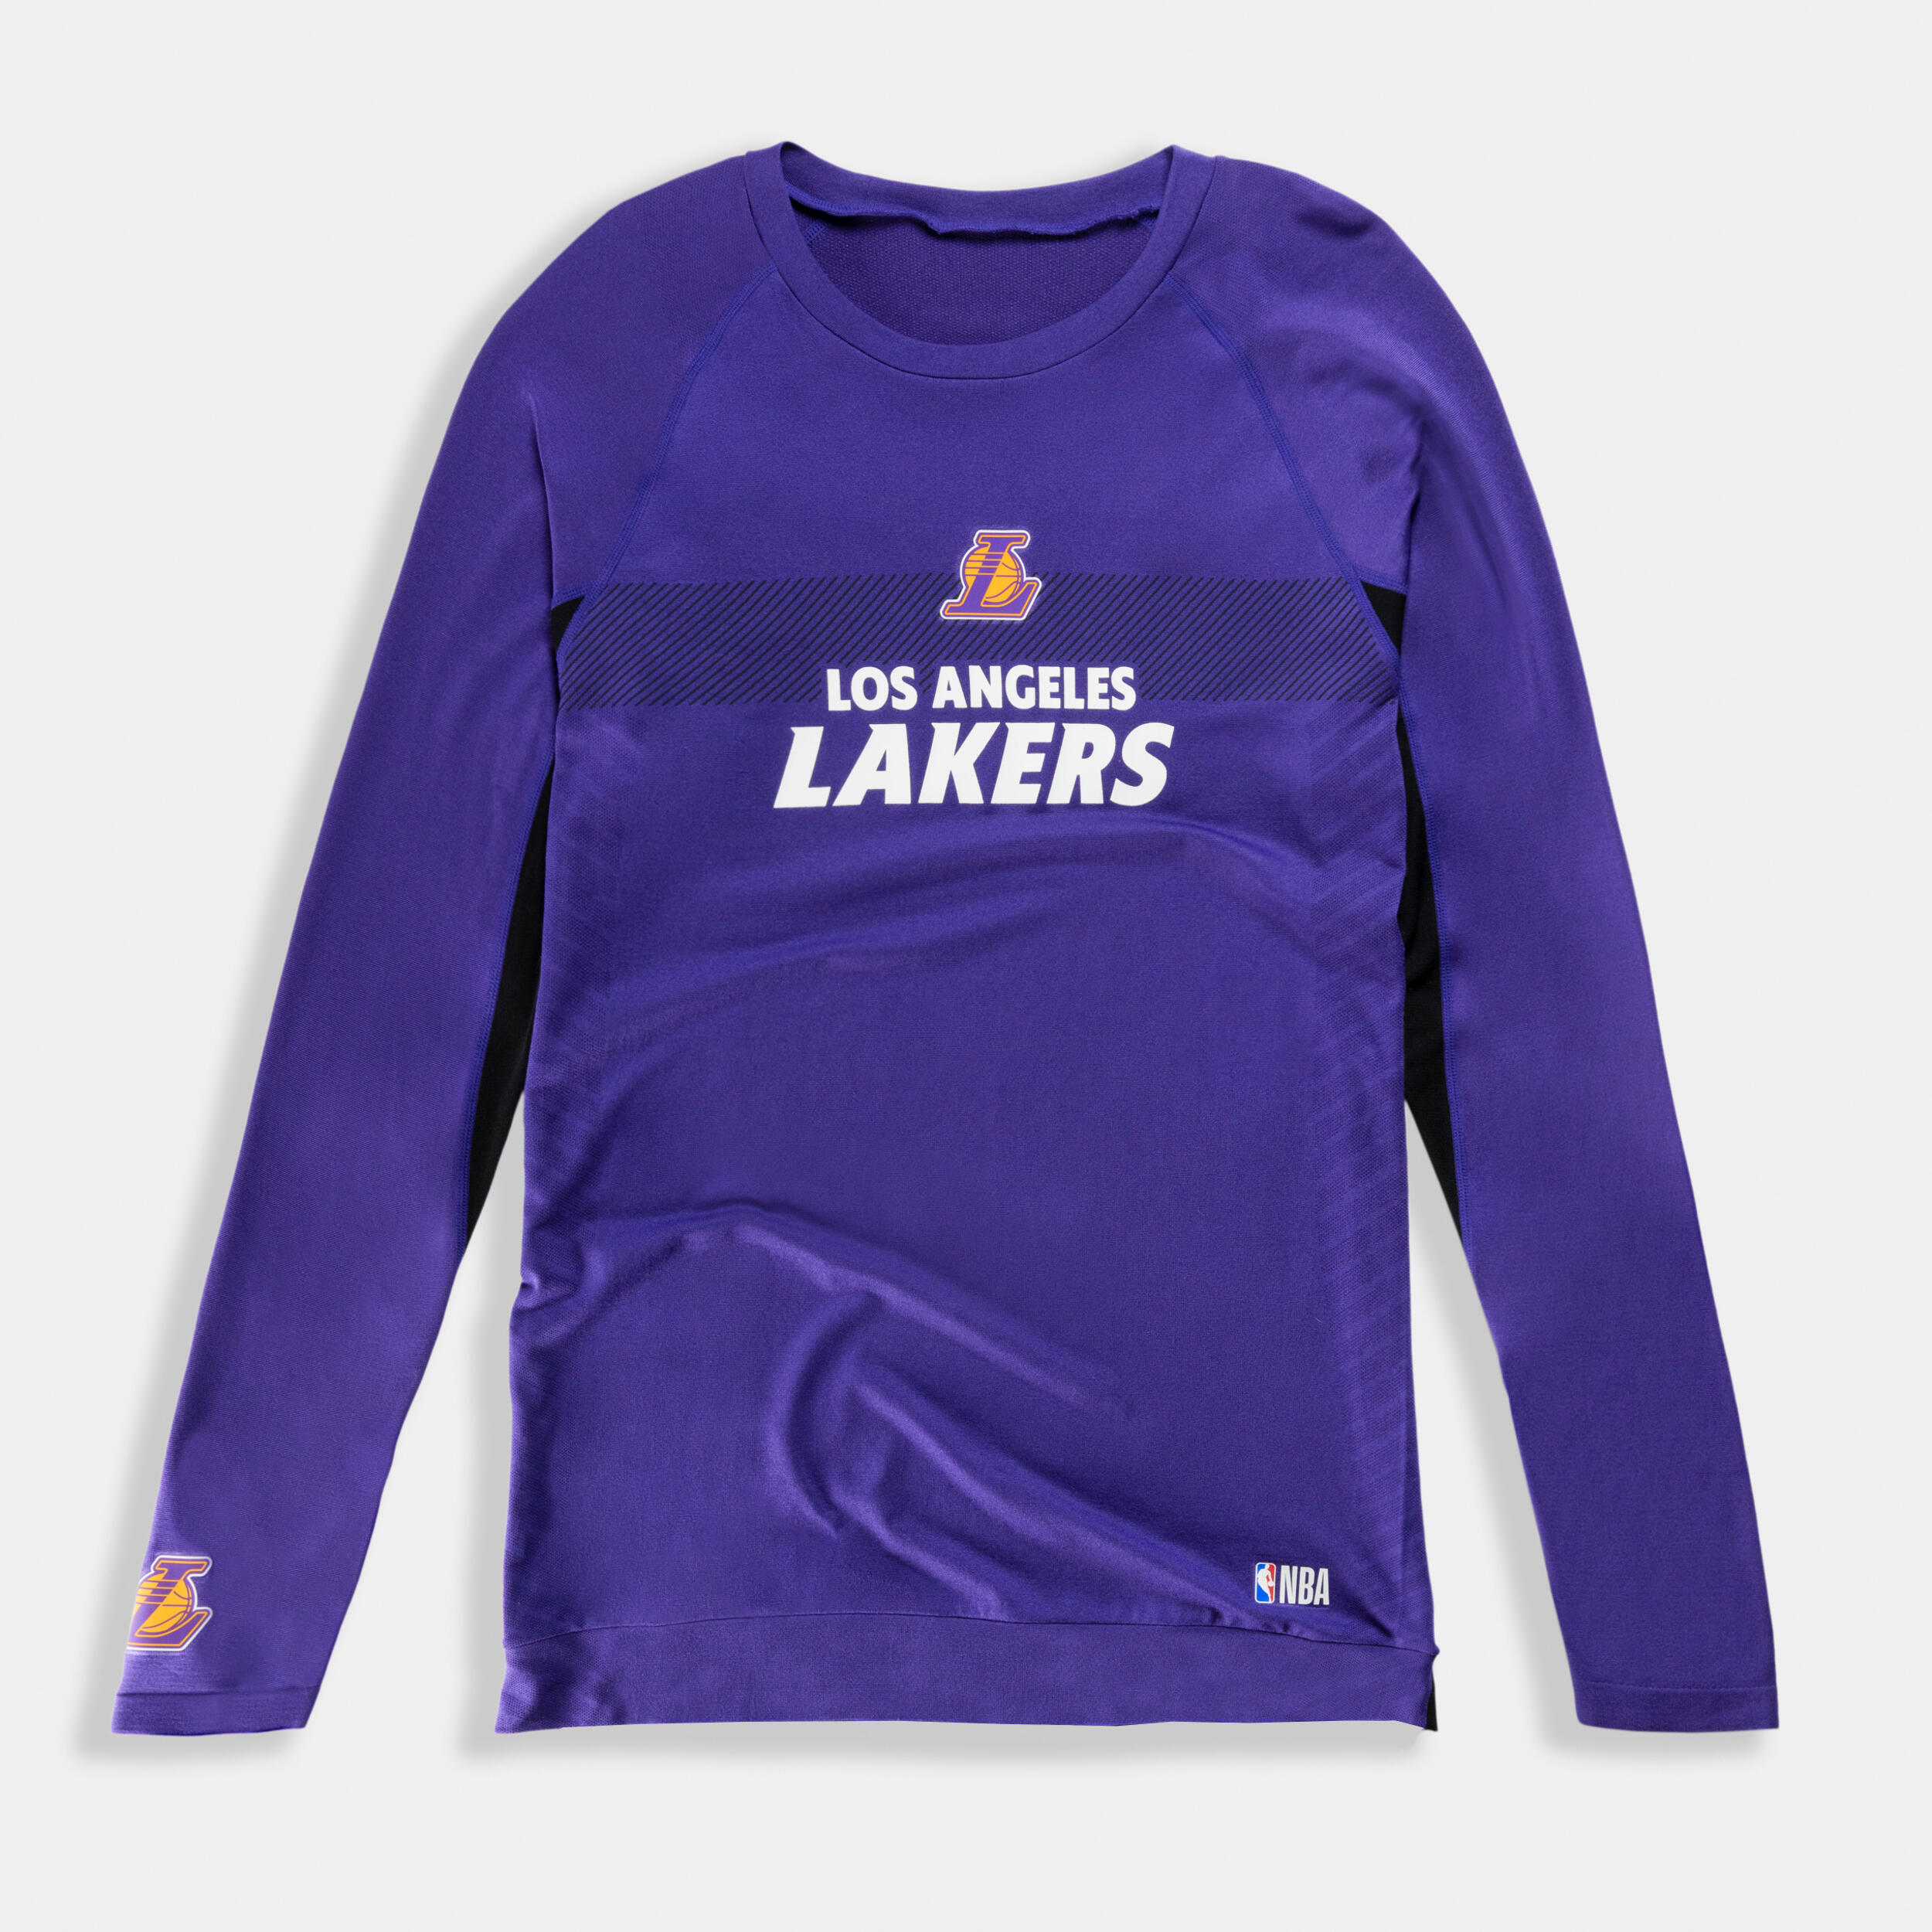 Men's/Women's Basketball Base Layer Jersey UT500 - NBA Los Angeles Lakers/Purple 4/9